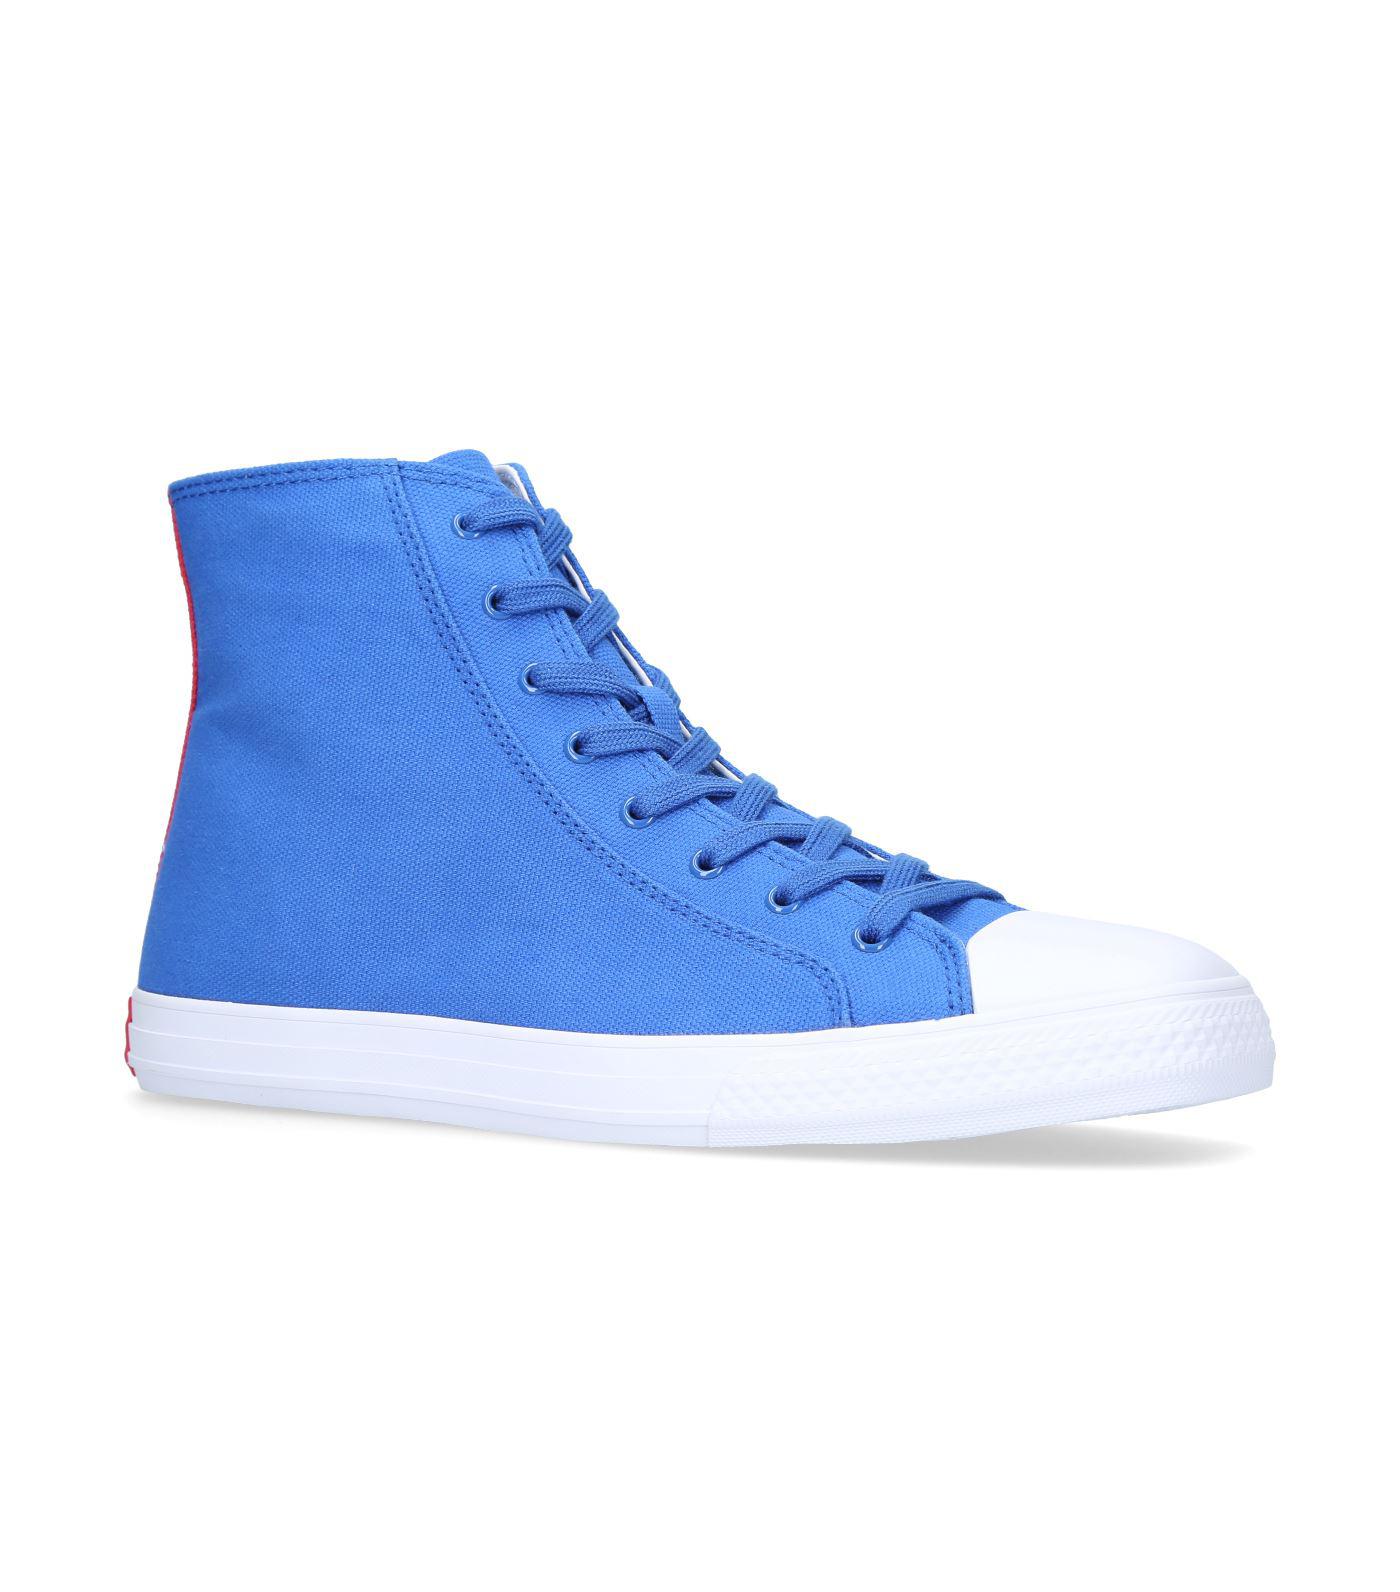 Calvin Klein Canvas 135 Sneakers in Blue for Men - Lyst